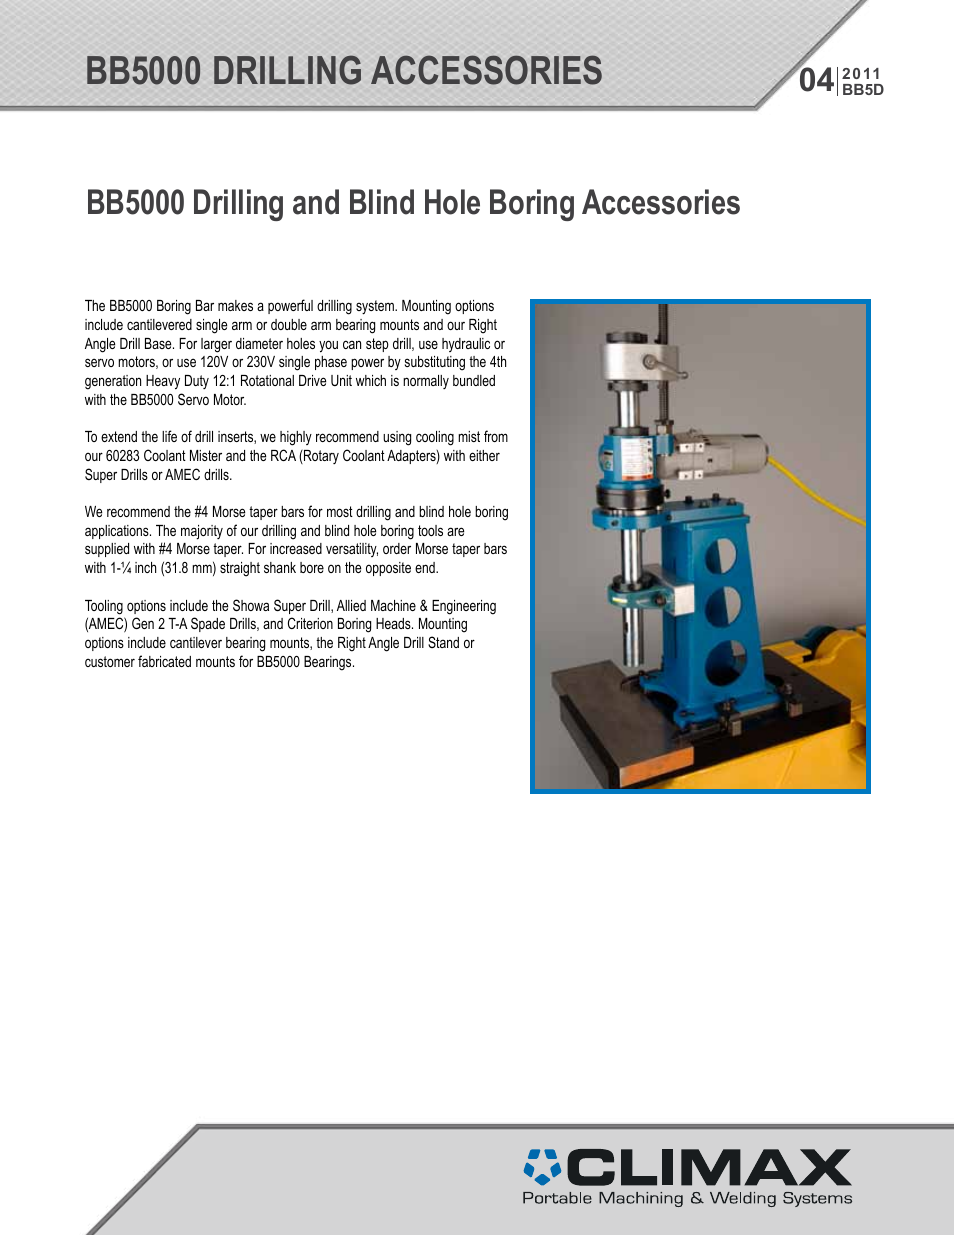 BB5000 Drilling Accessories